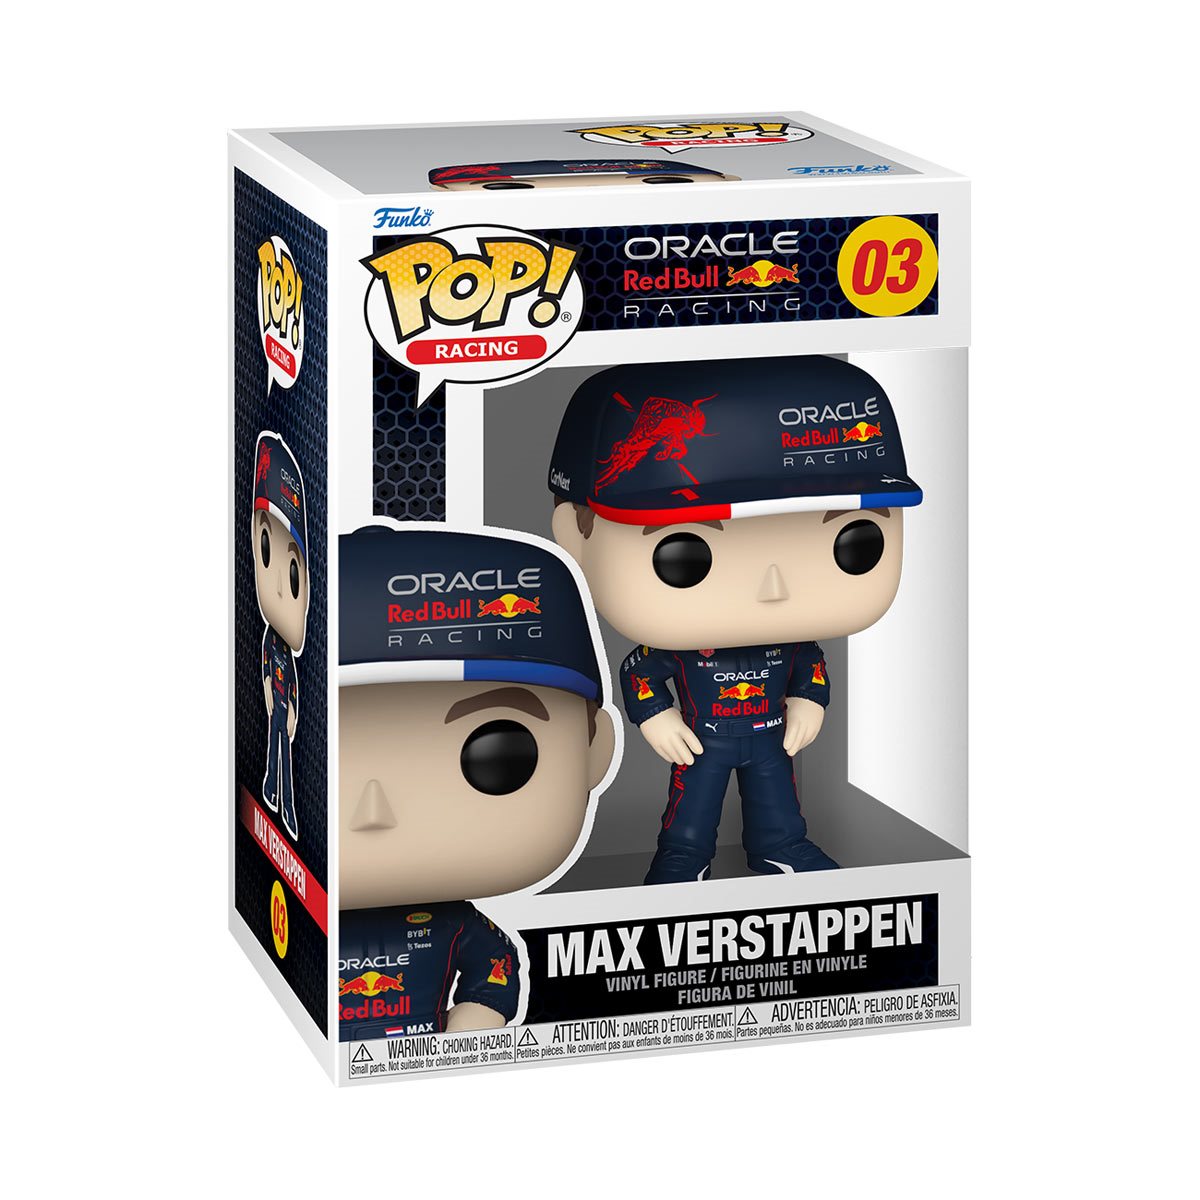 Formula 1 Max Verstappen Funko Pop! Vinyl Figure #03